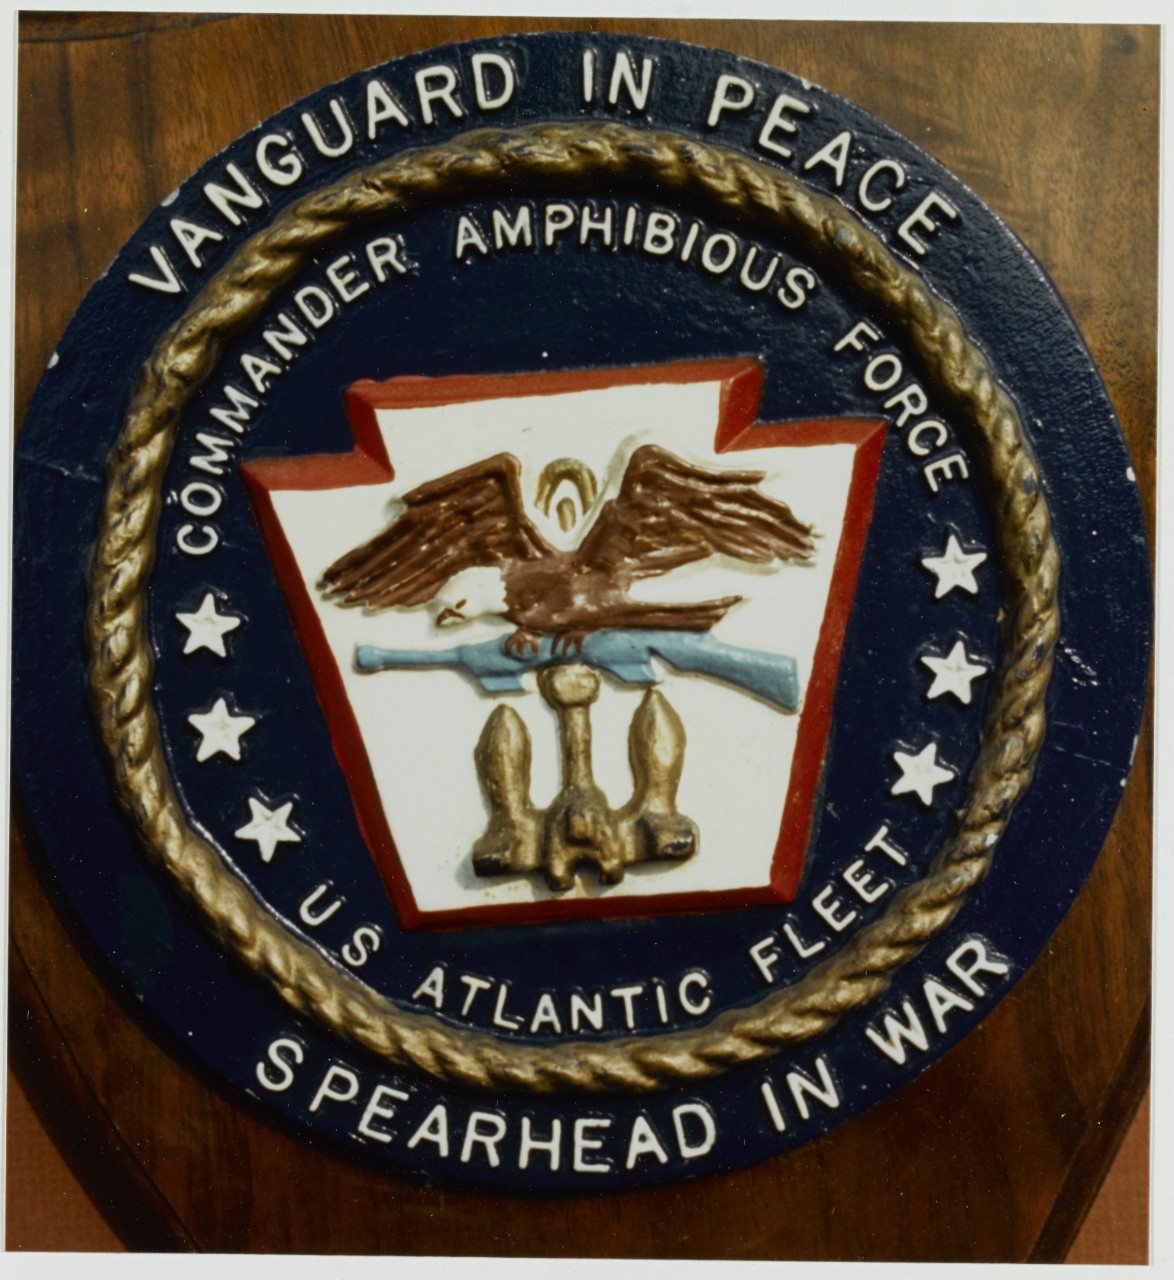 Insignia: Commander, Amphibious Force, U.S. Atlantic Fleet (PhibLant) Plaque received in 1984